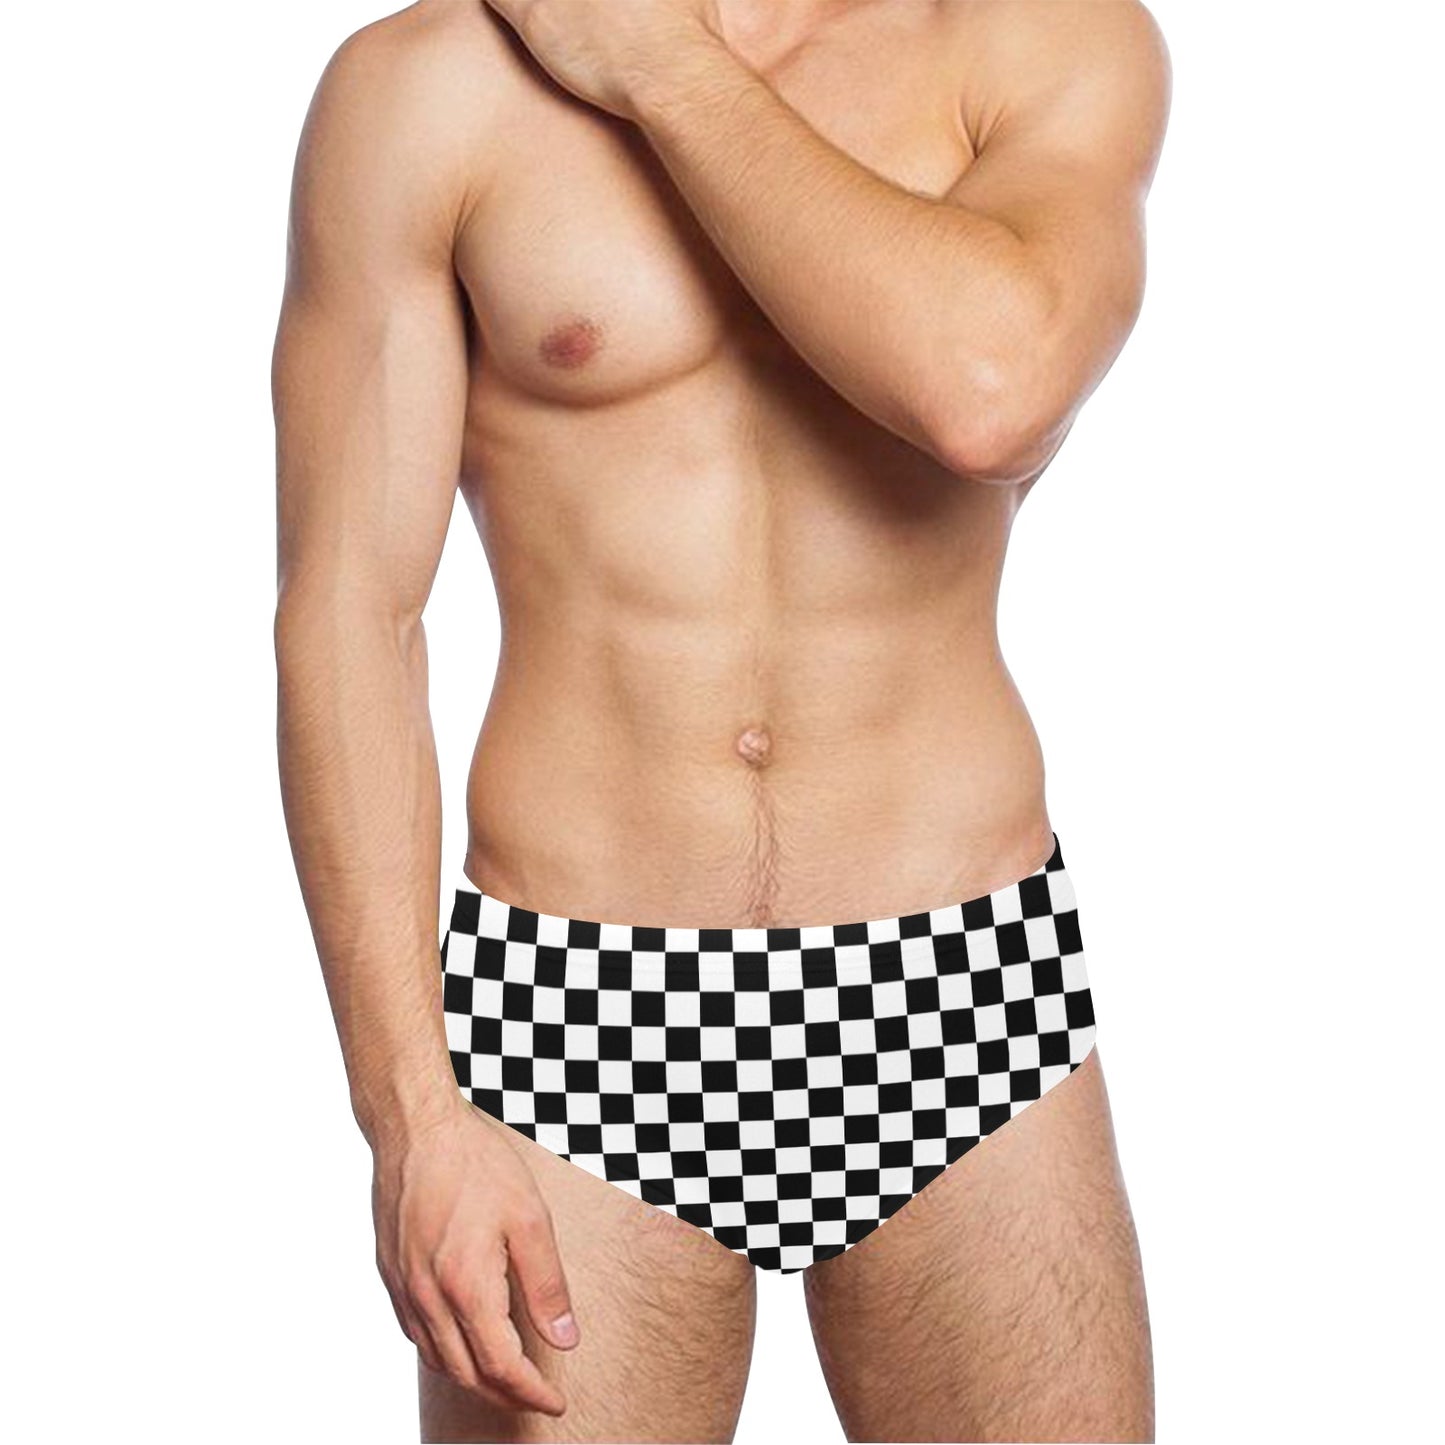 Checkered Men Swim Briefs, Black White Check Sexy 80s Swimwear Trunks Swimming Suit Swimsuit Low Rise Underwear Vintage Designer Bikini